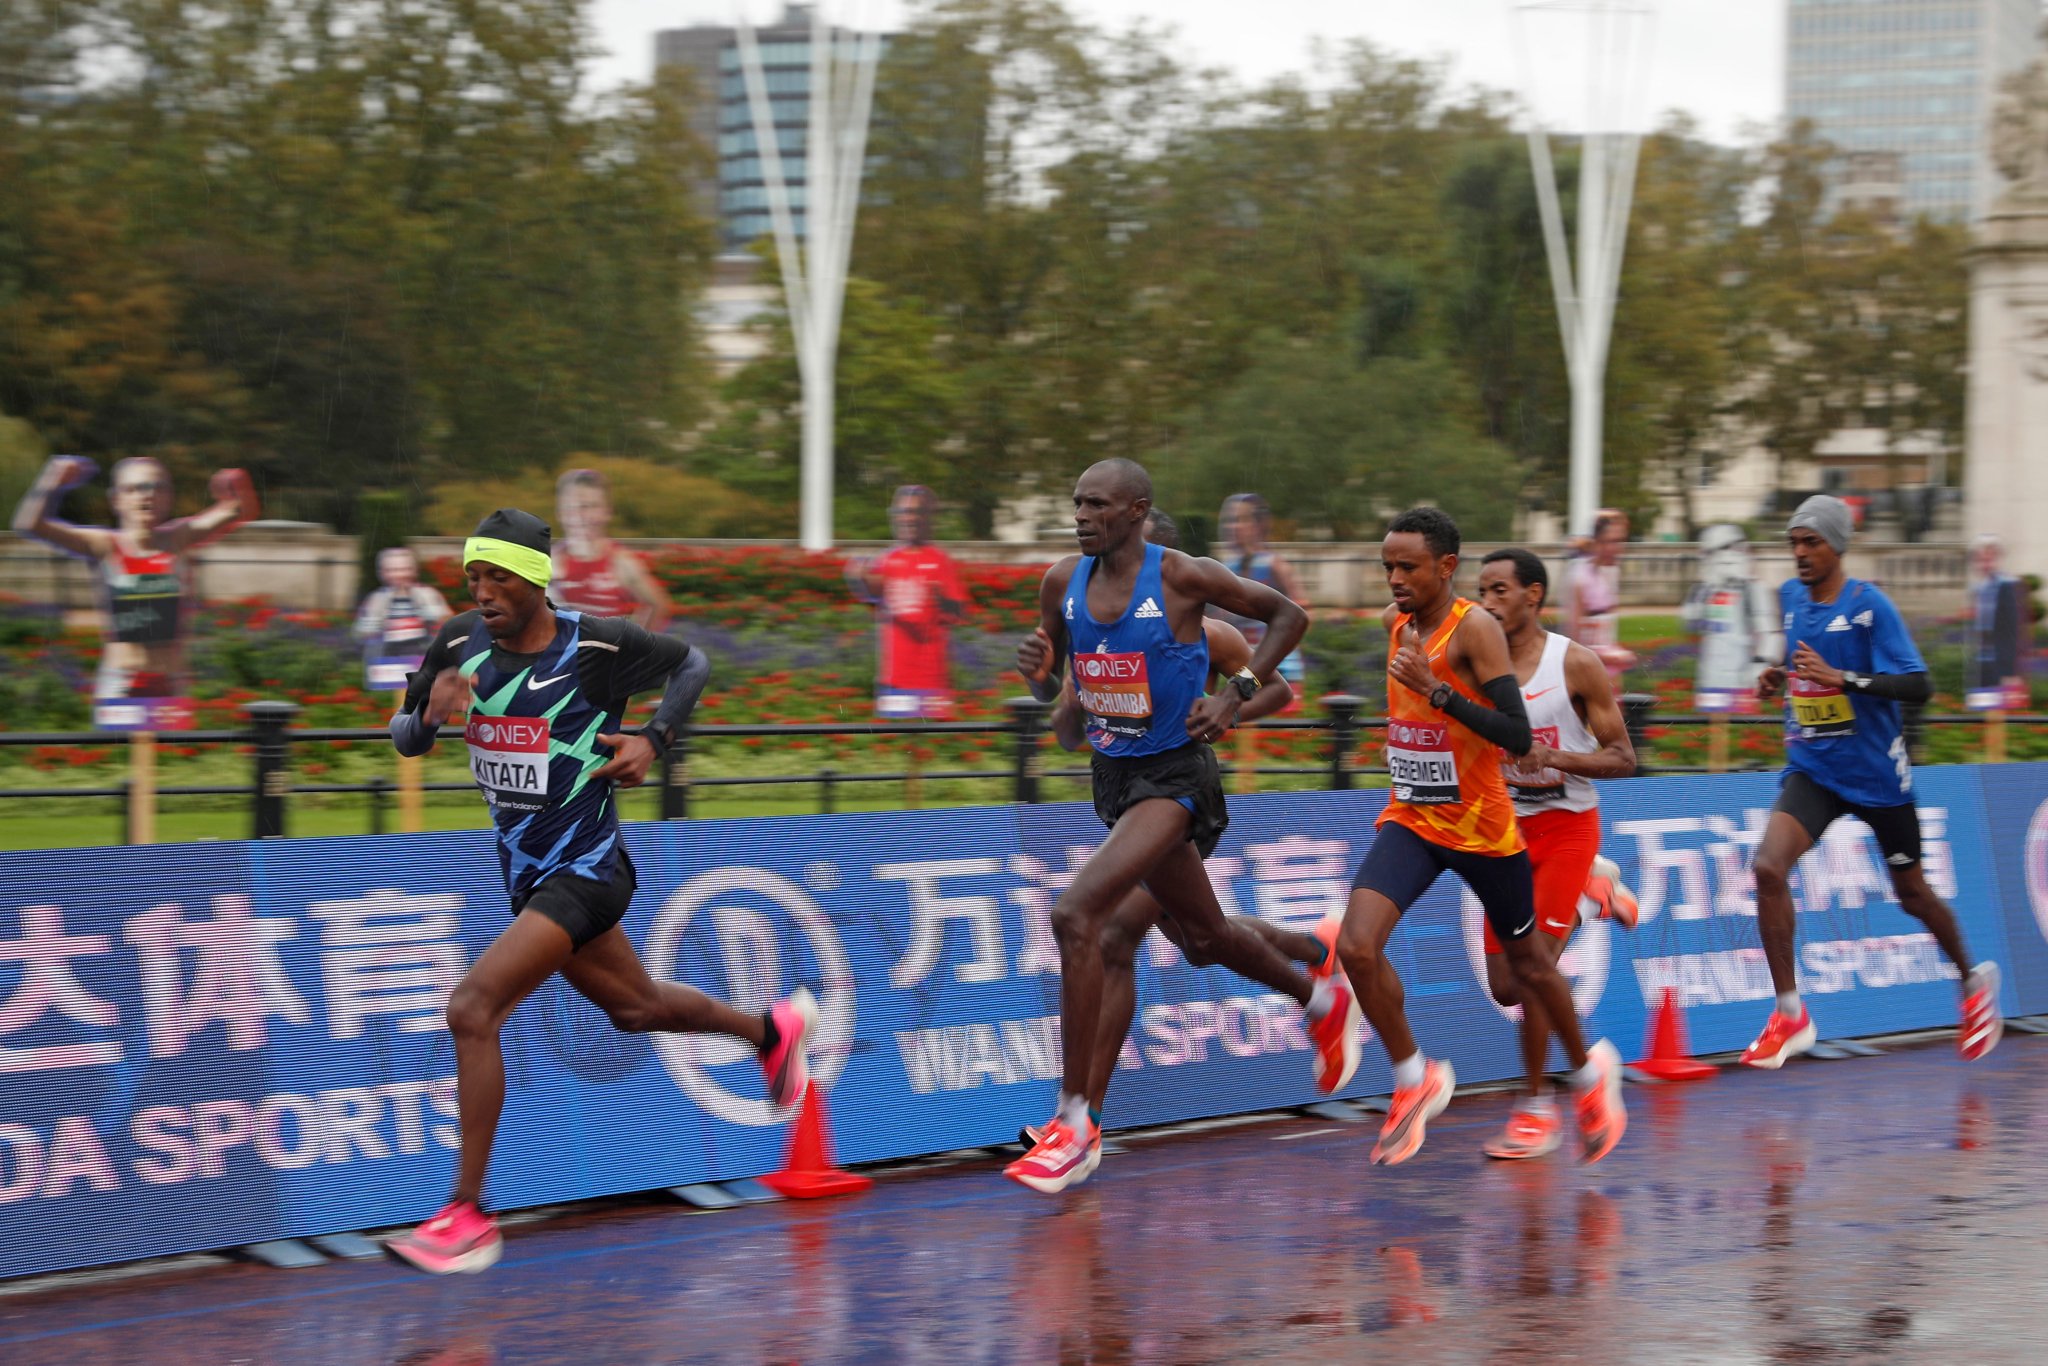 Ethiopia’s Kitata finishes first followed